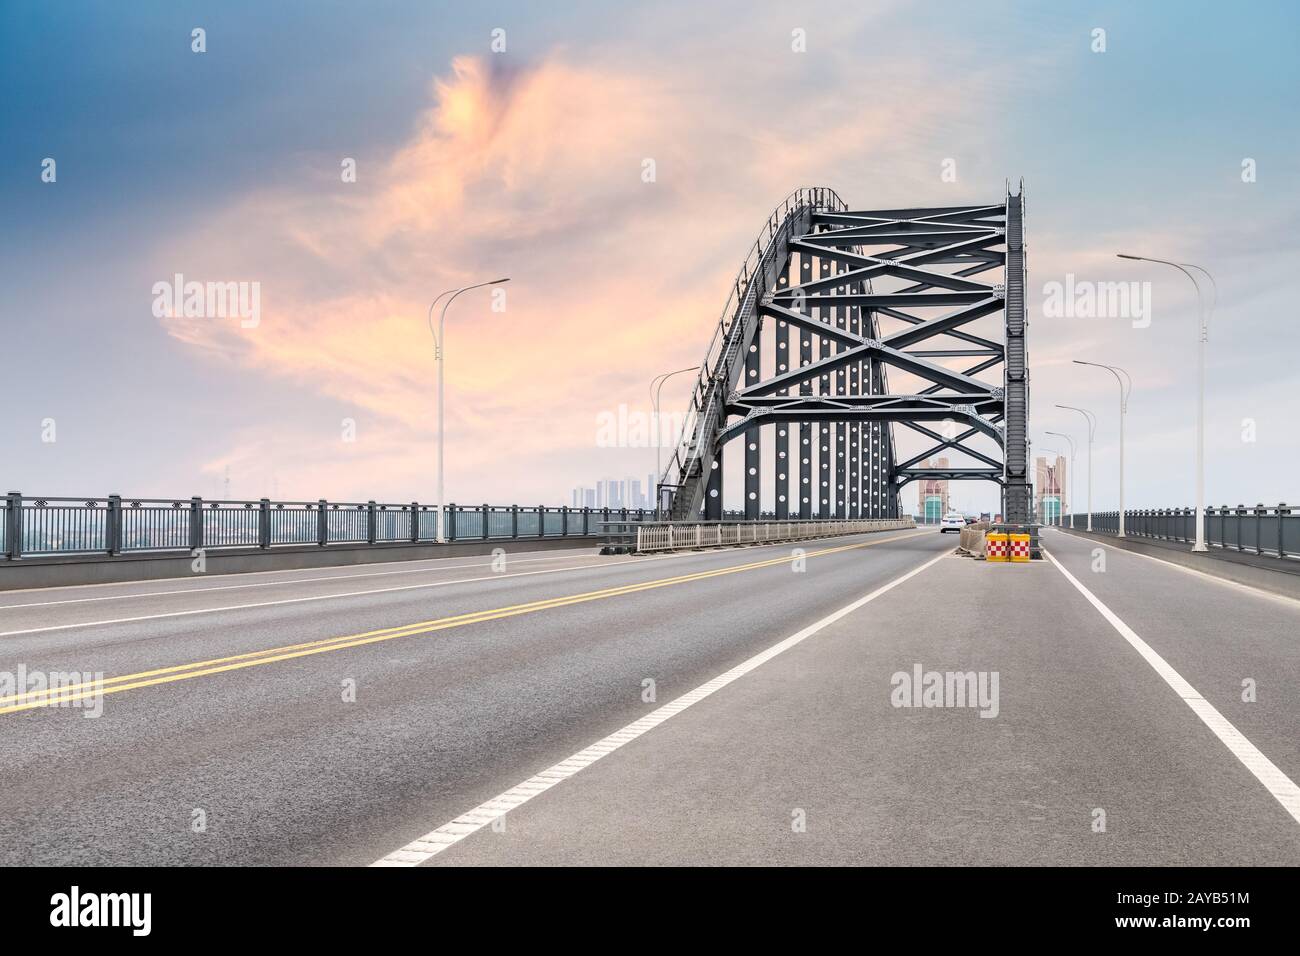 steel bridge and road with dusk sky Stock Photo